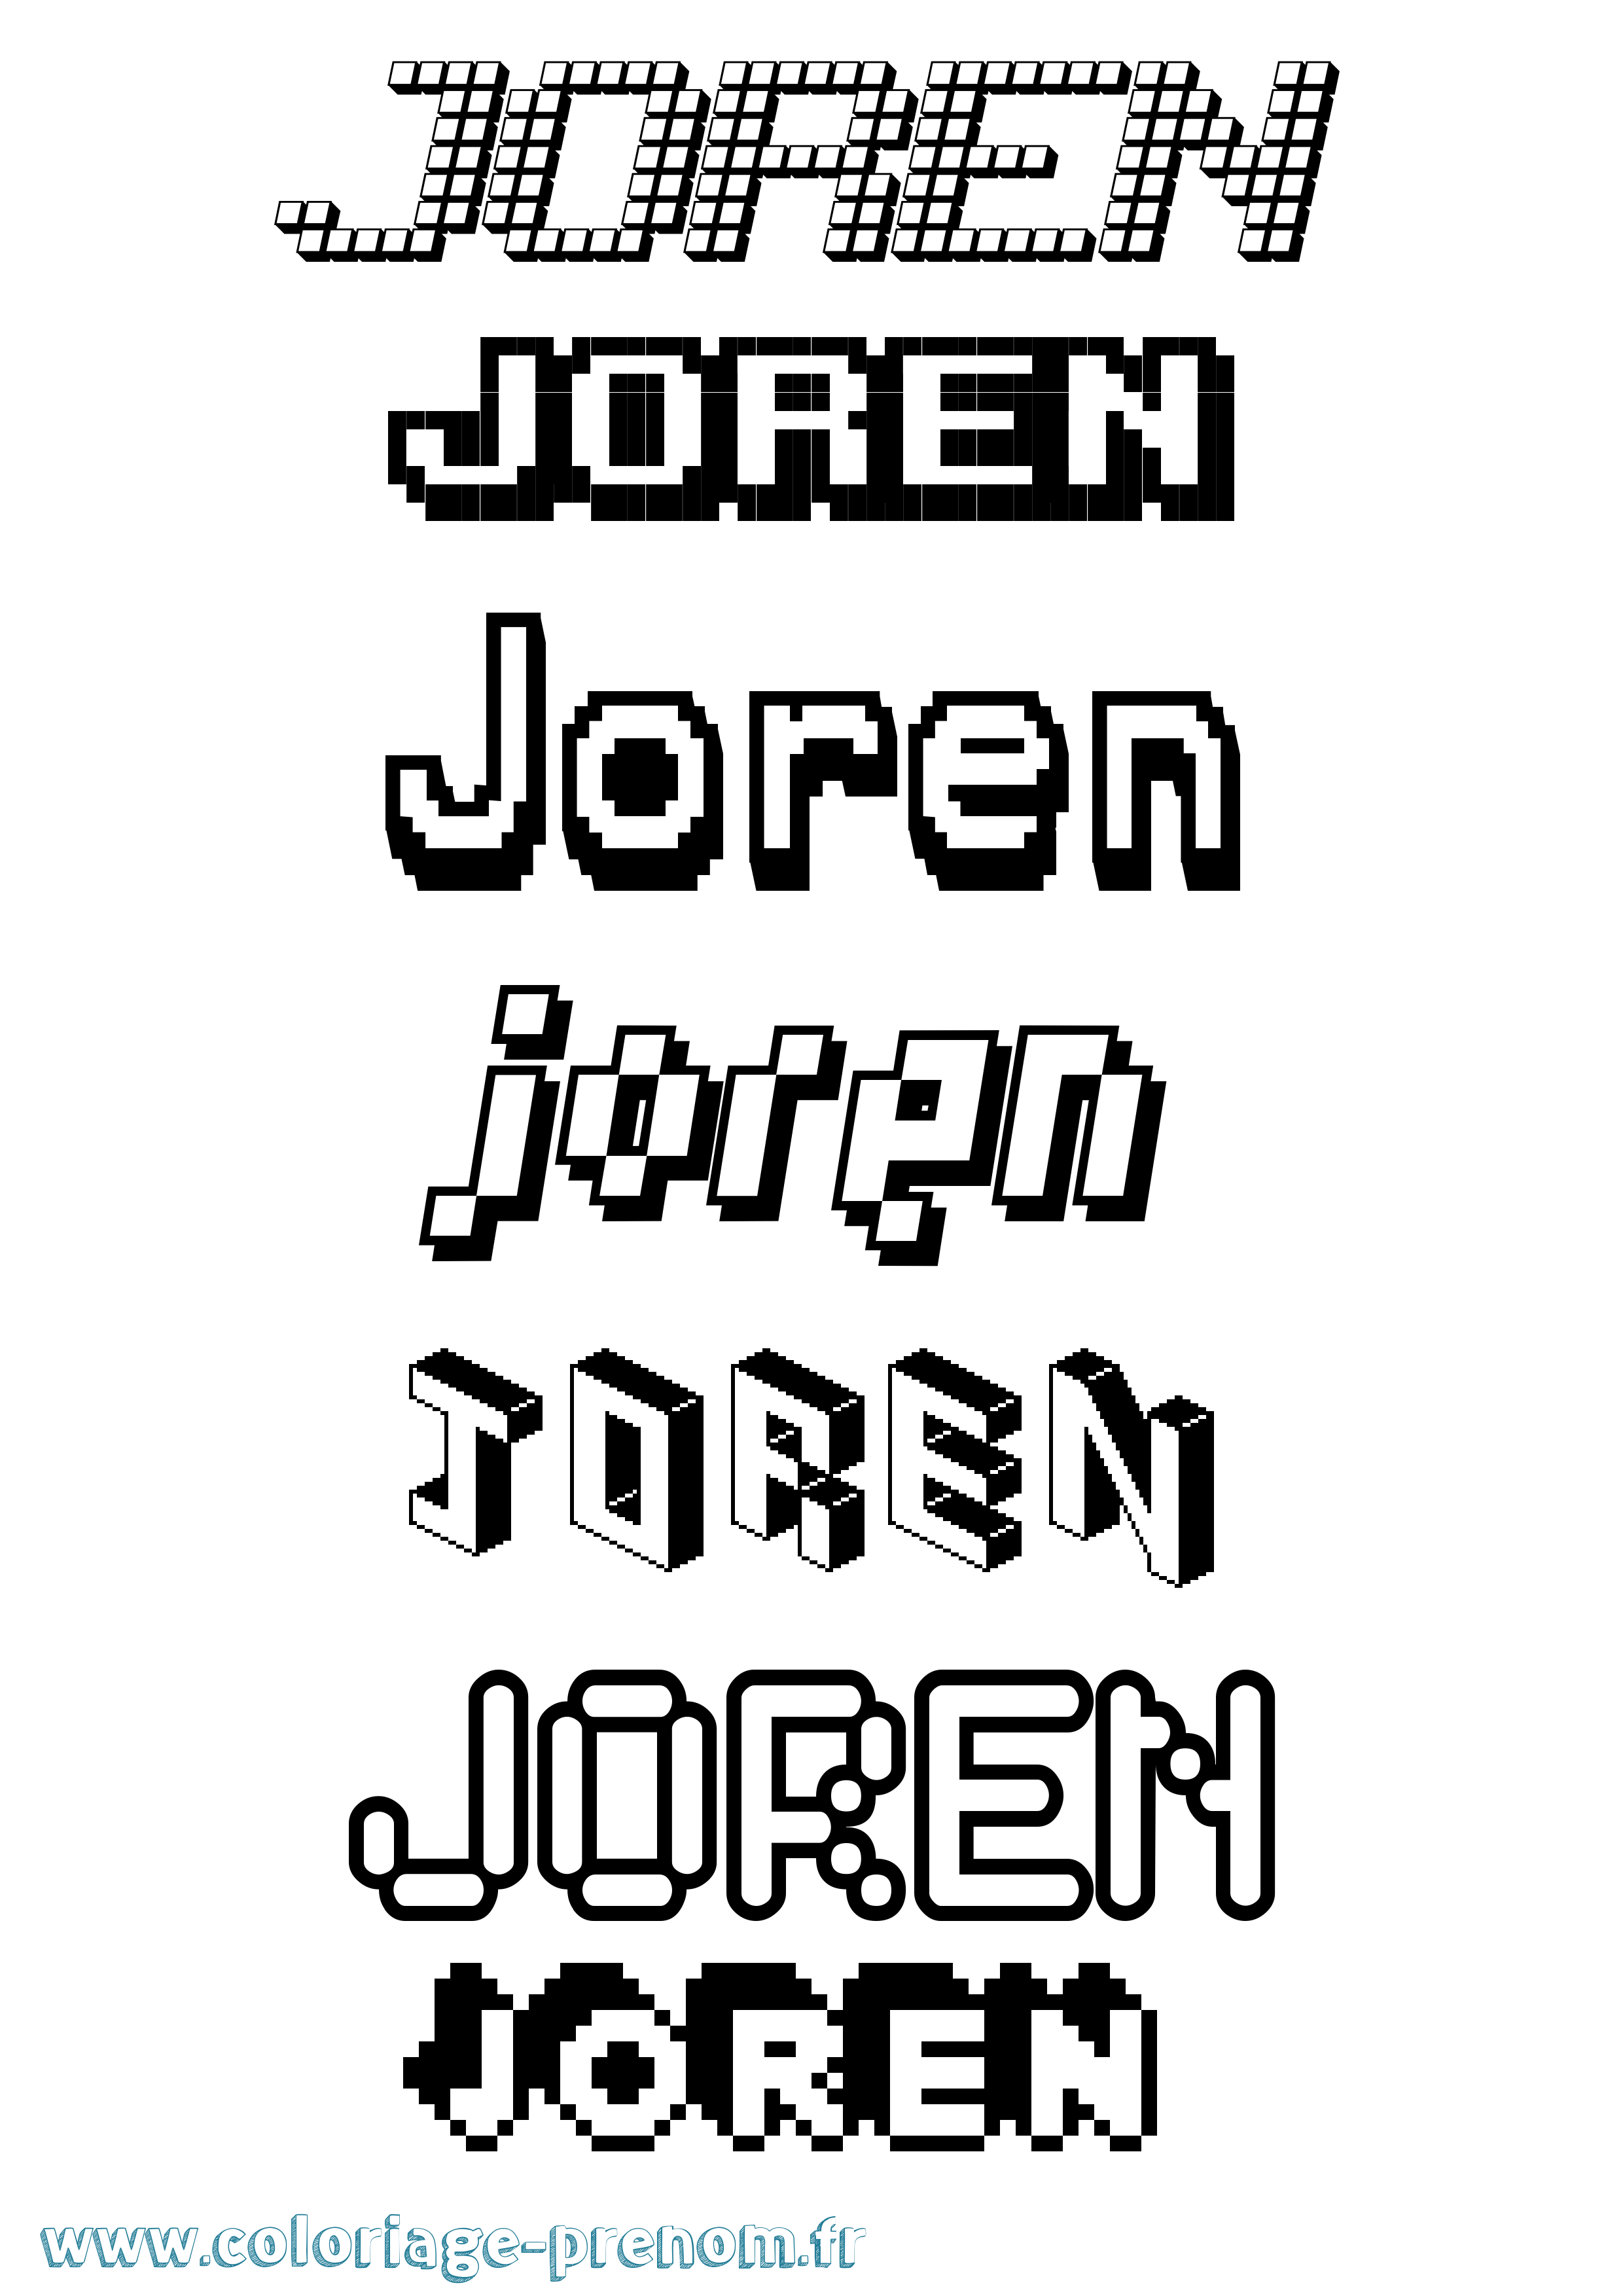 Coloriage prénom Joren Pixel